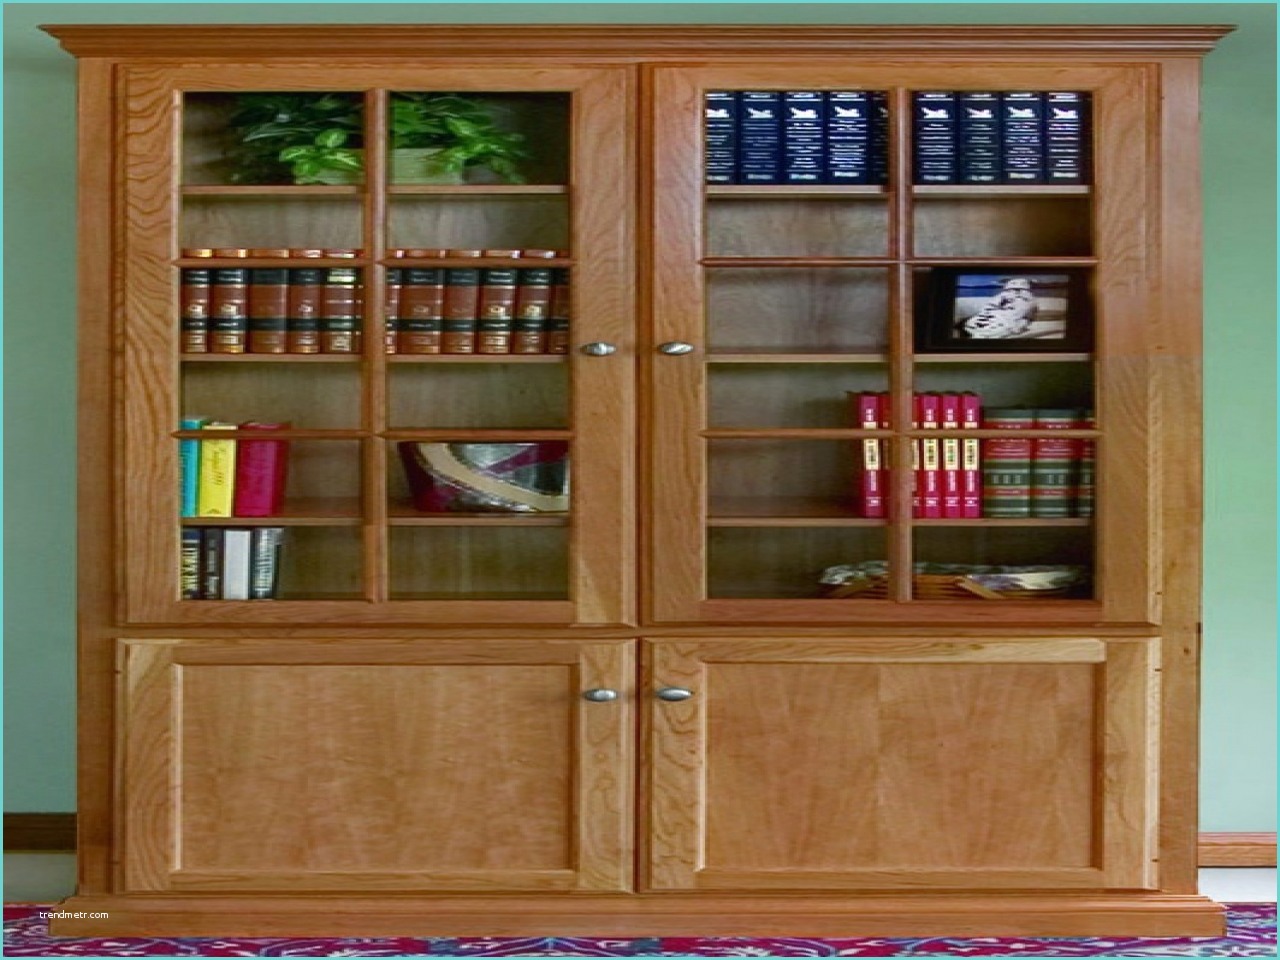 Design Ideas Amp Bookshelf with Doors How to Build A Bookshelf with Doors